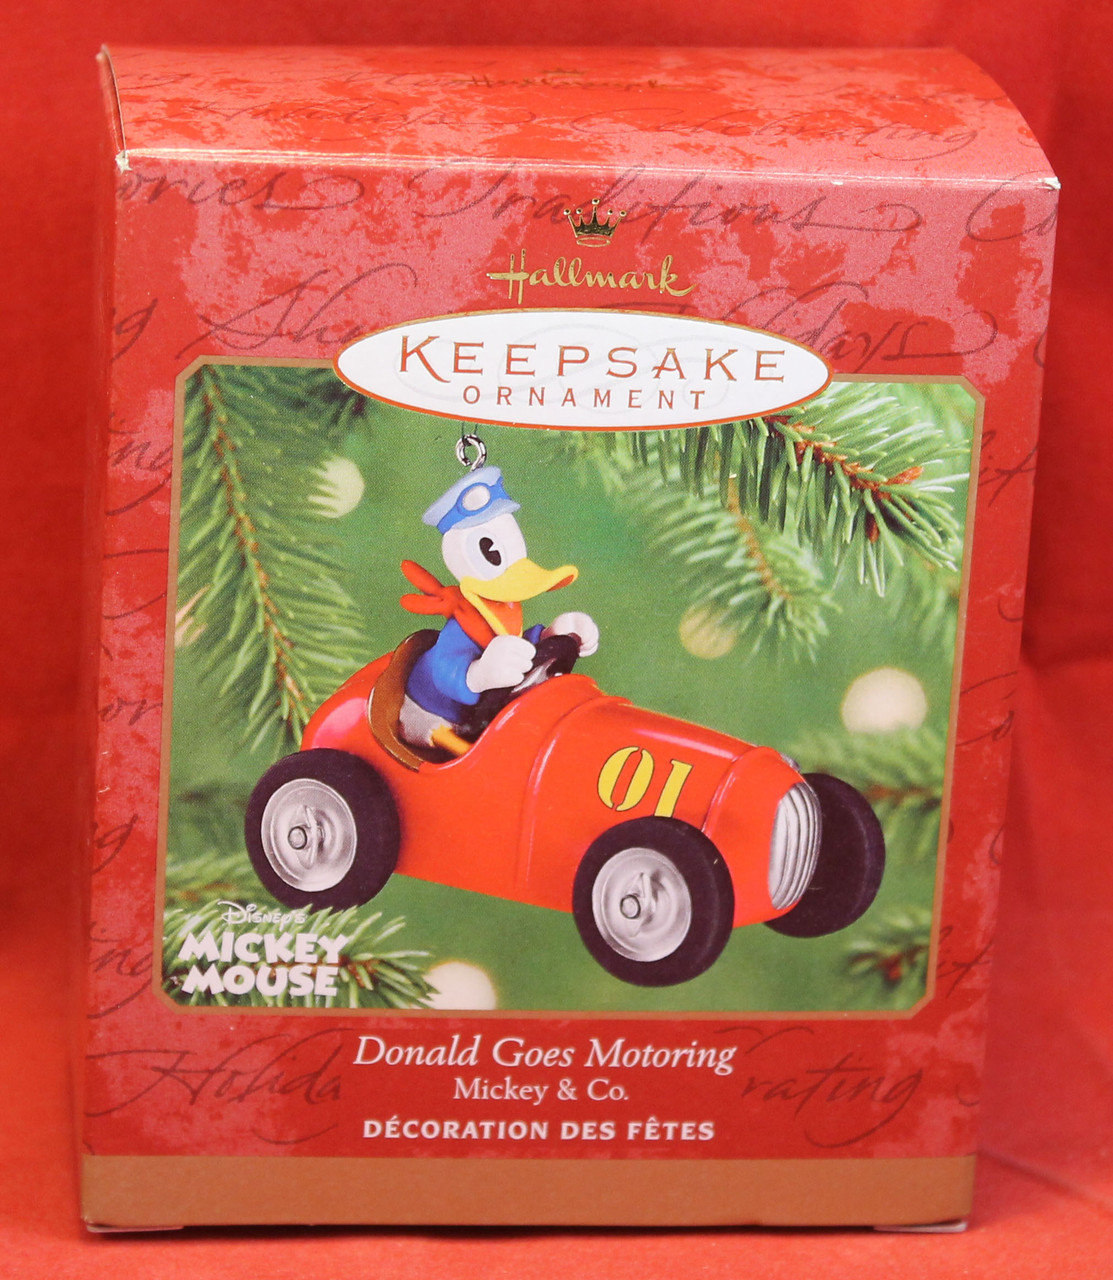 Disney Christmas Ornament - Donald Goes Motoring